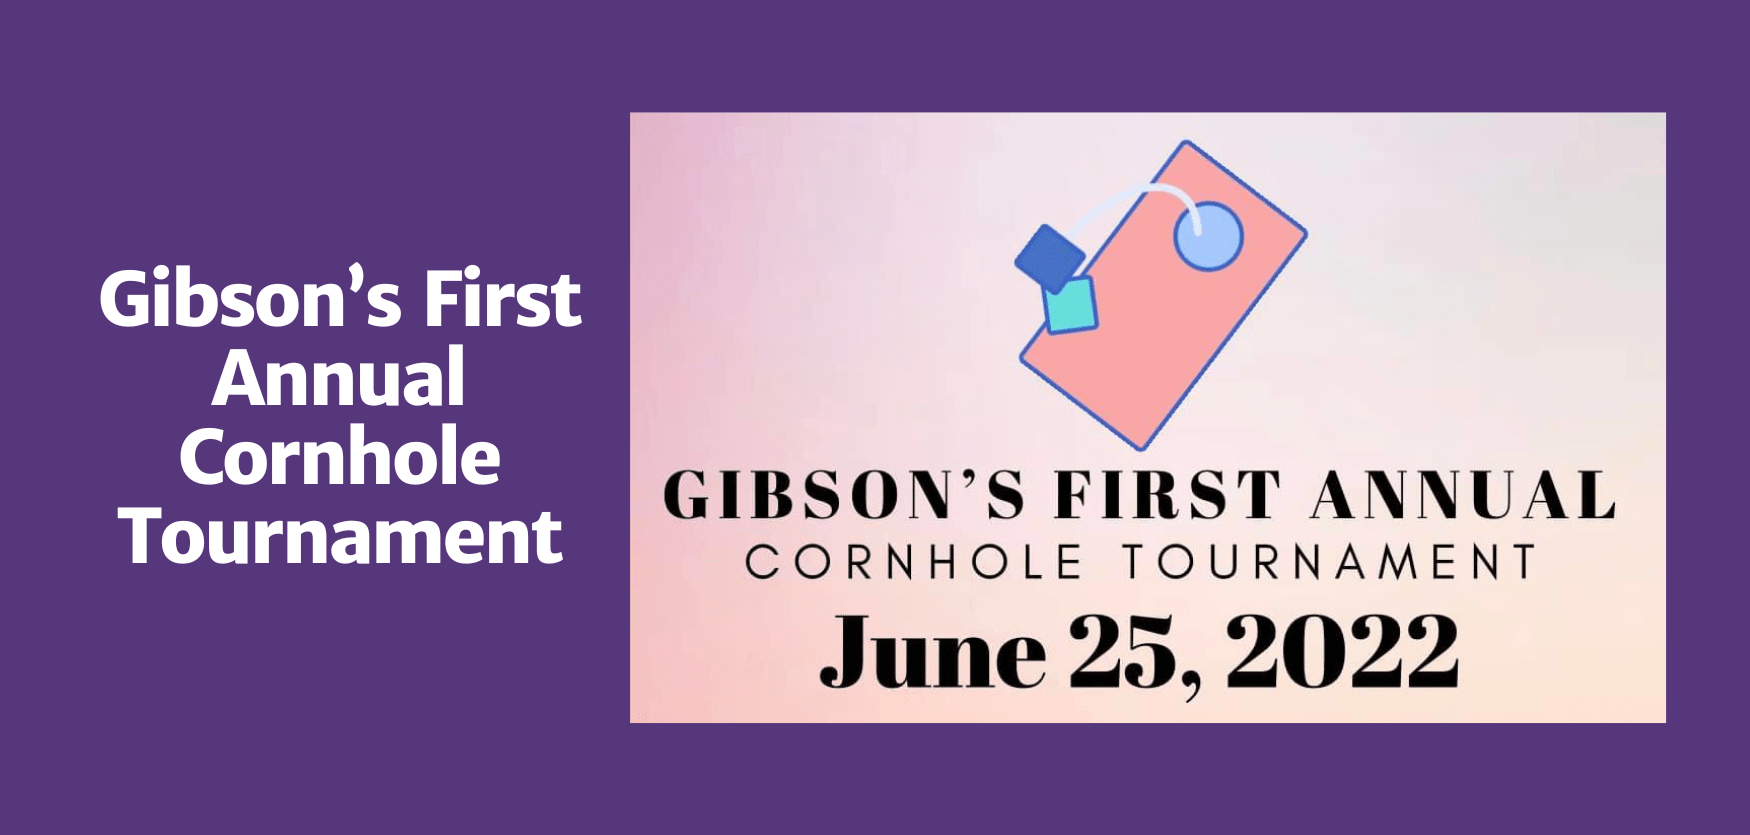 Gibson’s First Annual Cornhole Tournament!